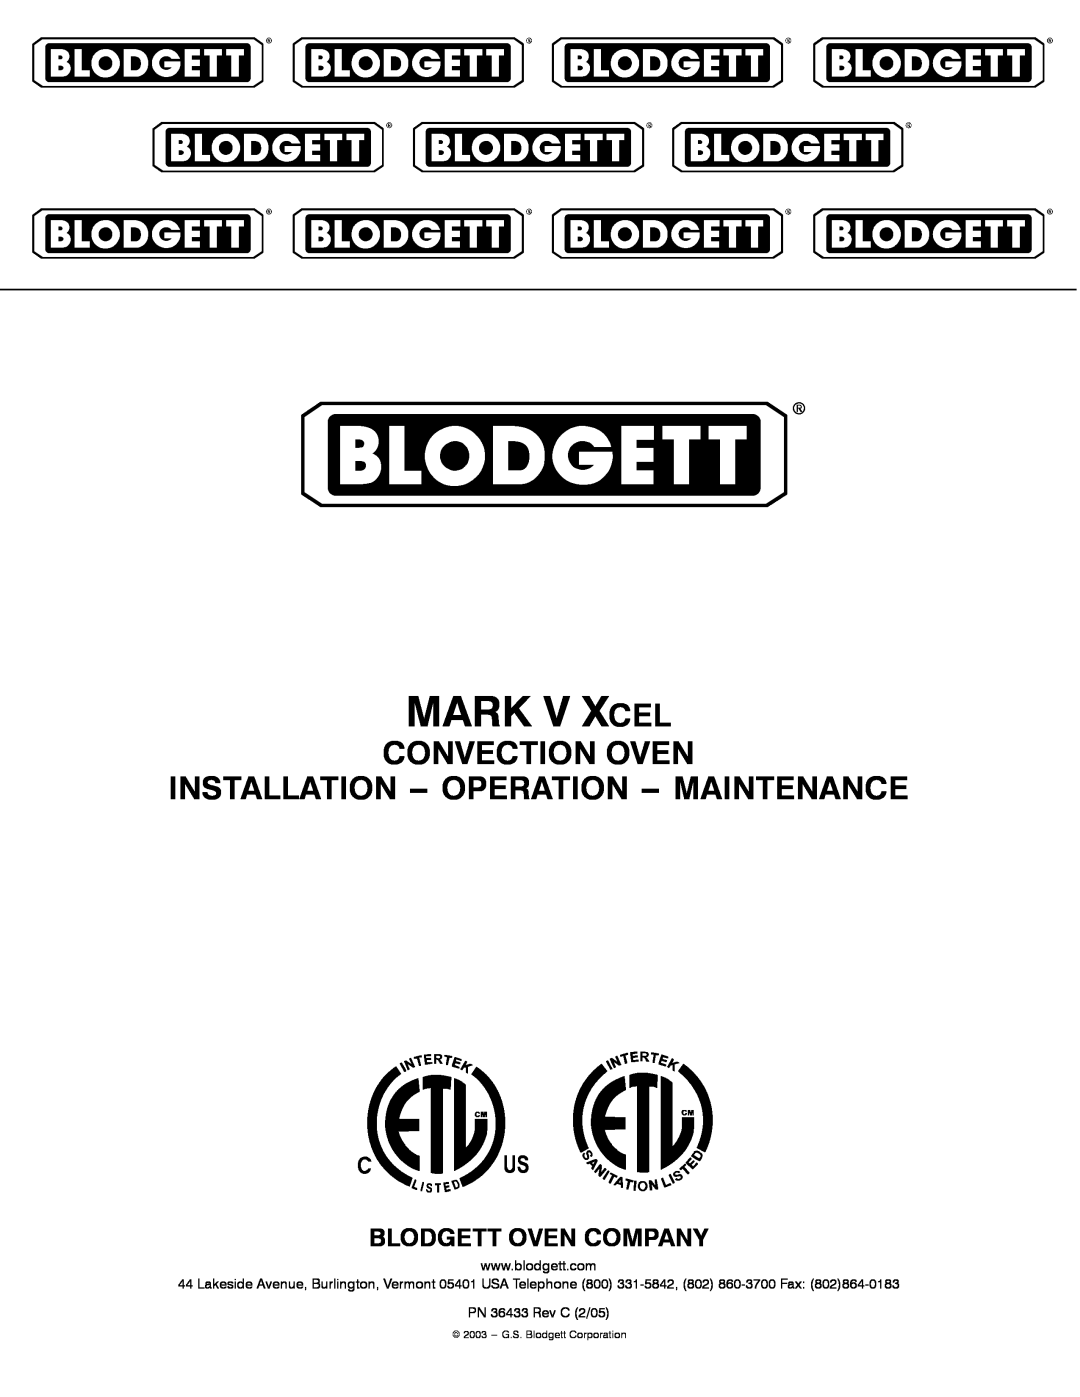 Blodgett MARK V XCEL CONVECTION OVEN manual Mark V Xcel, Convection Oven Installation -- Operation -- Maintenance 